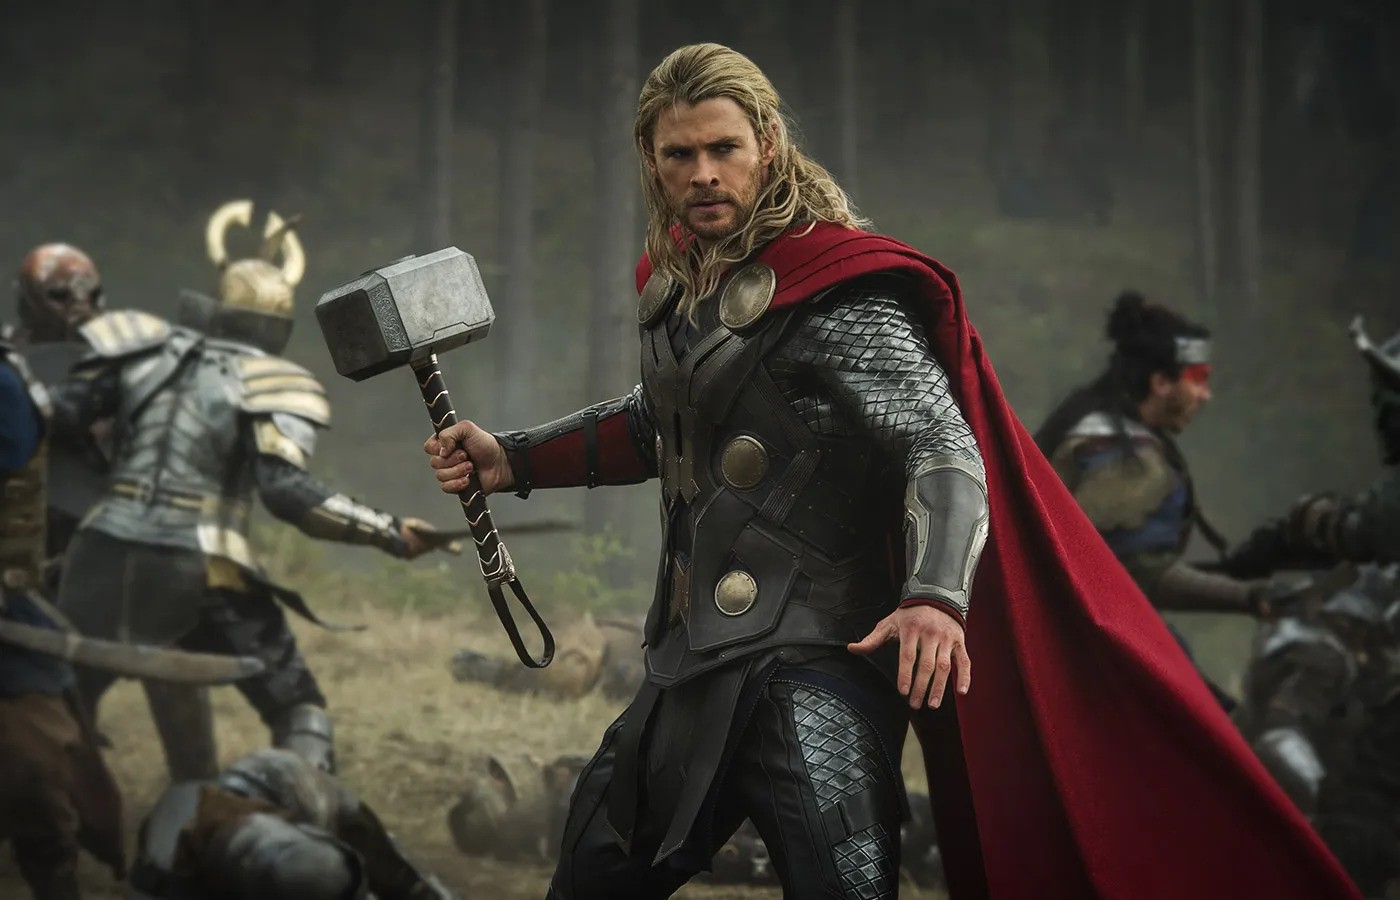 Chris Hemsworth as Thor with Mjolnir